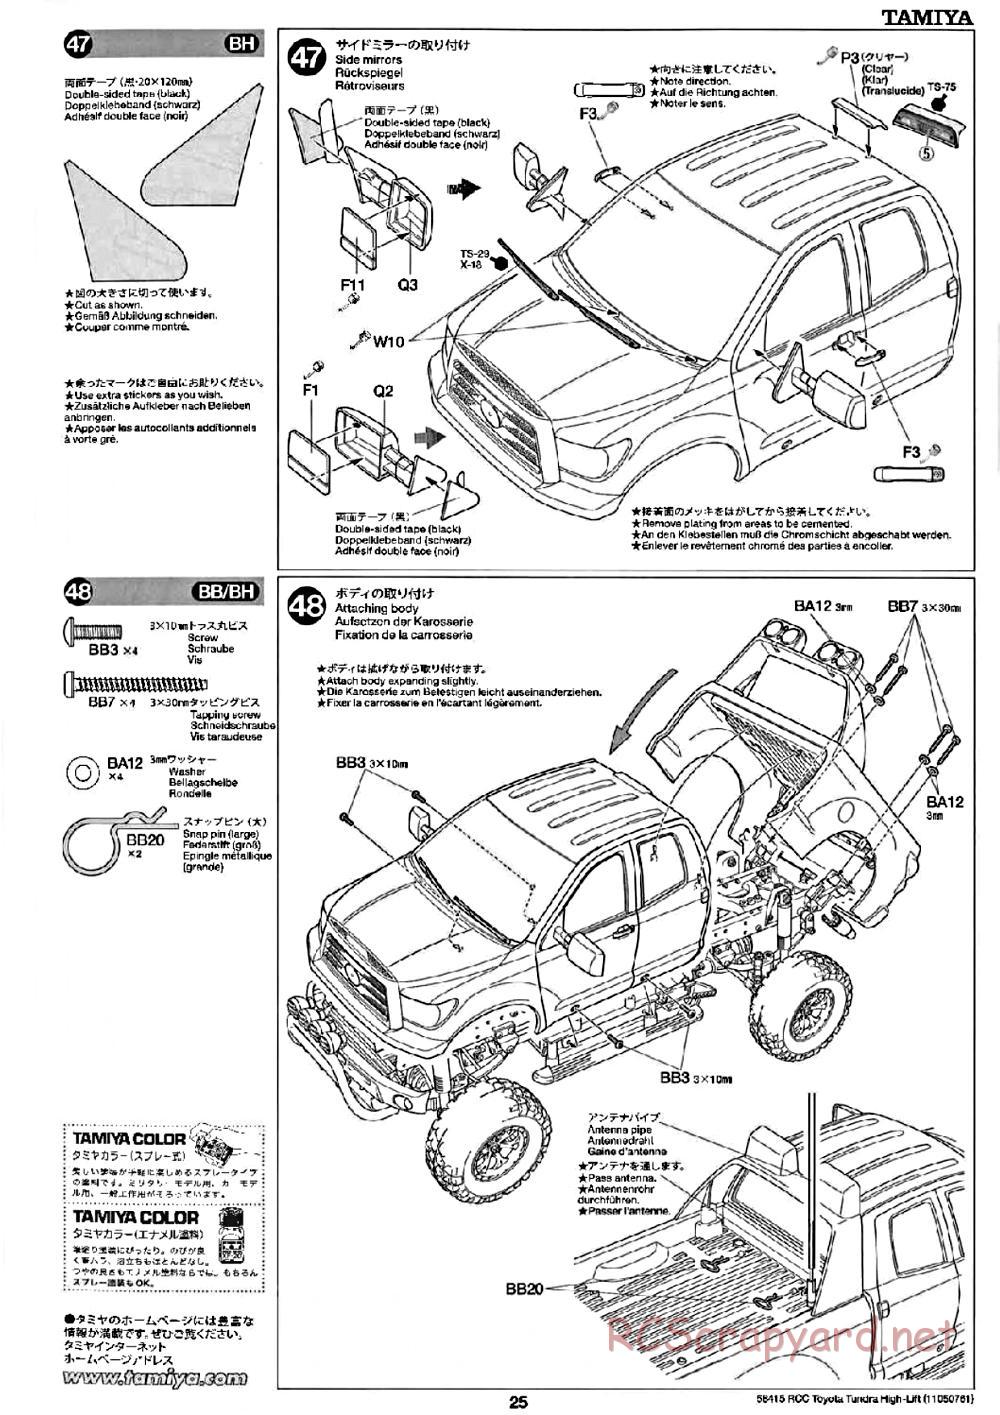 Tamiya - Toyota Tundra High-Lift Chassis - Manual - Page 25